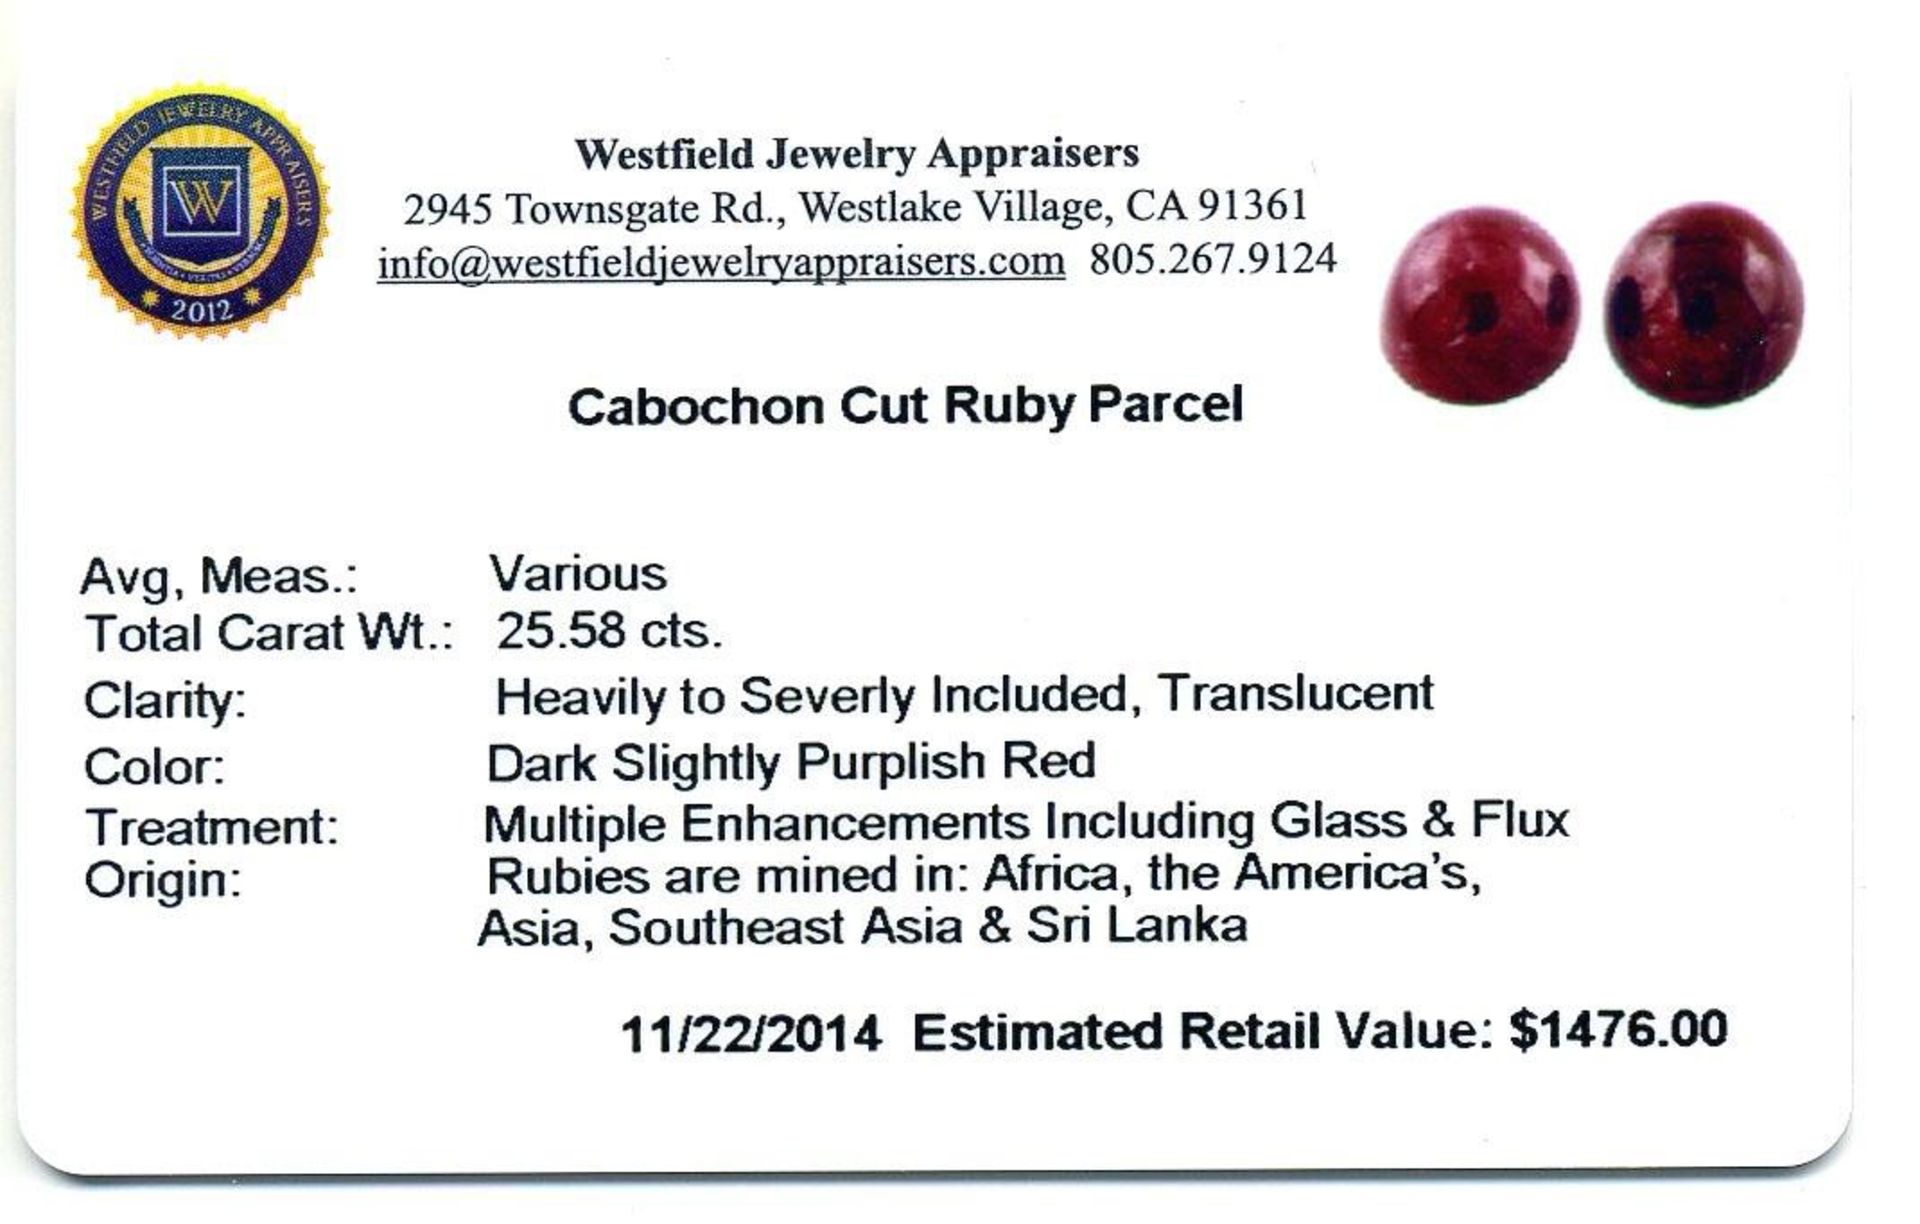 25.58 ctw. Cabochon Cut Ruby Parcel - Image 2 of 2